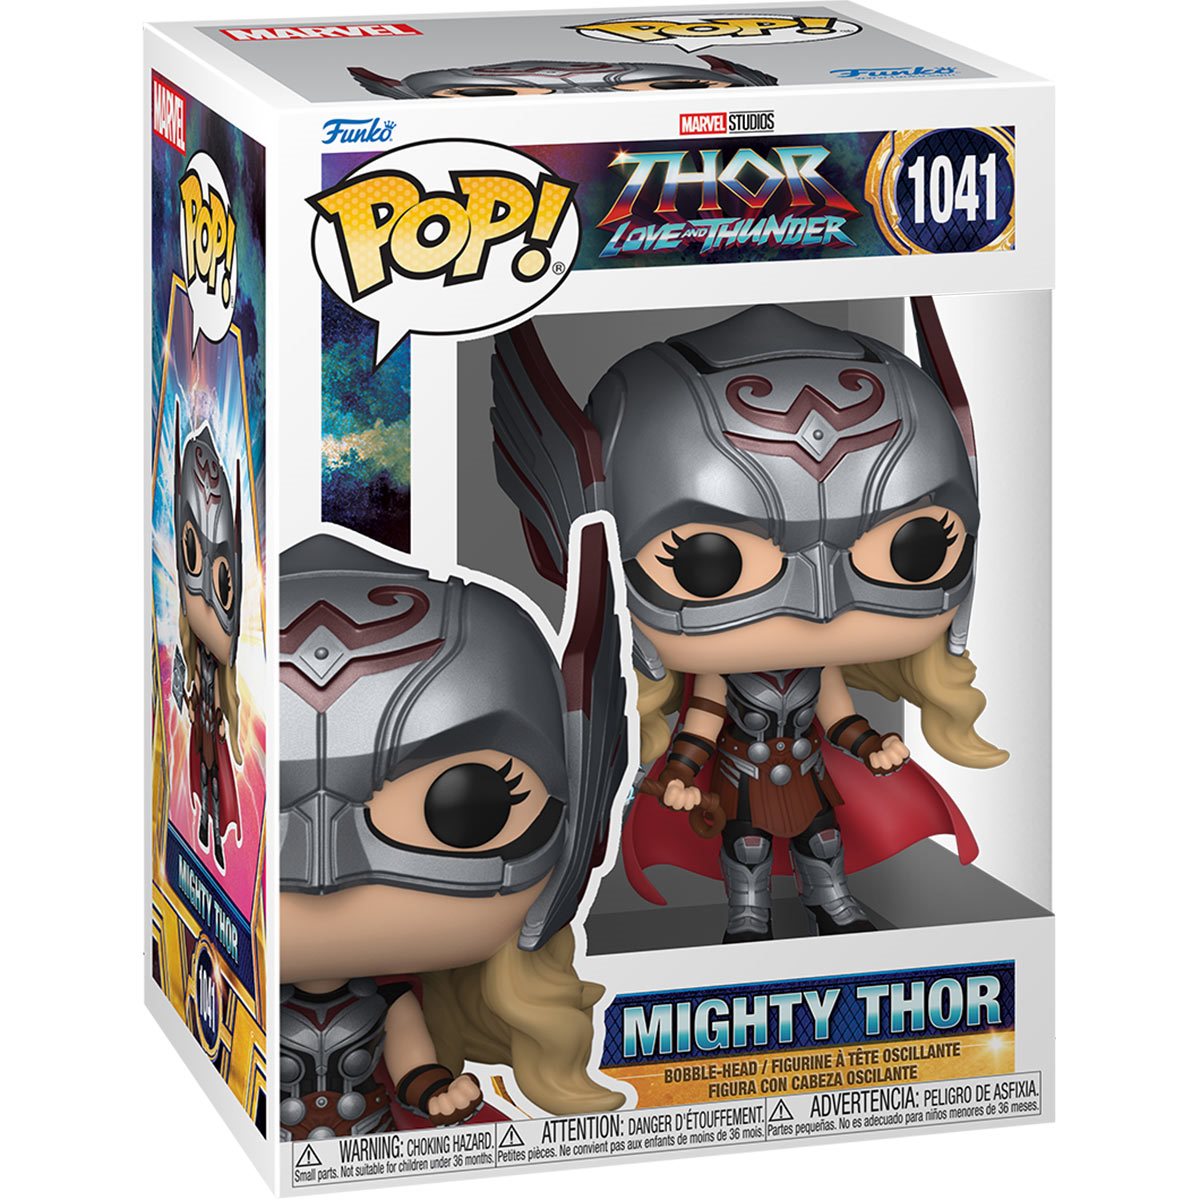 Thor: Love and Thunder Mighty Thor Funko Pop! Vinyl Figure #1041